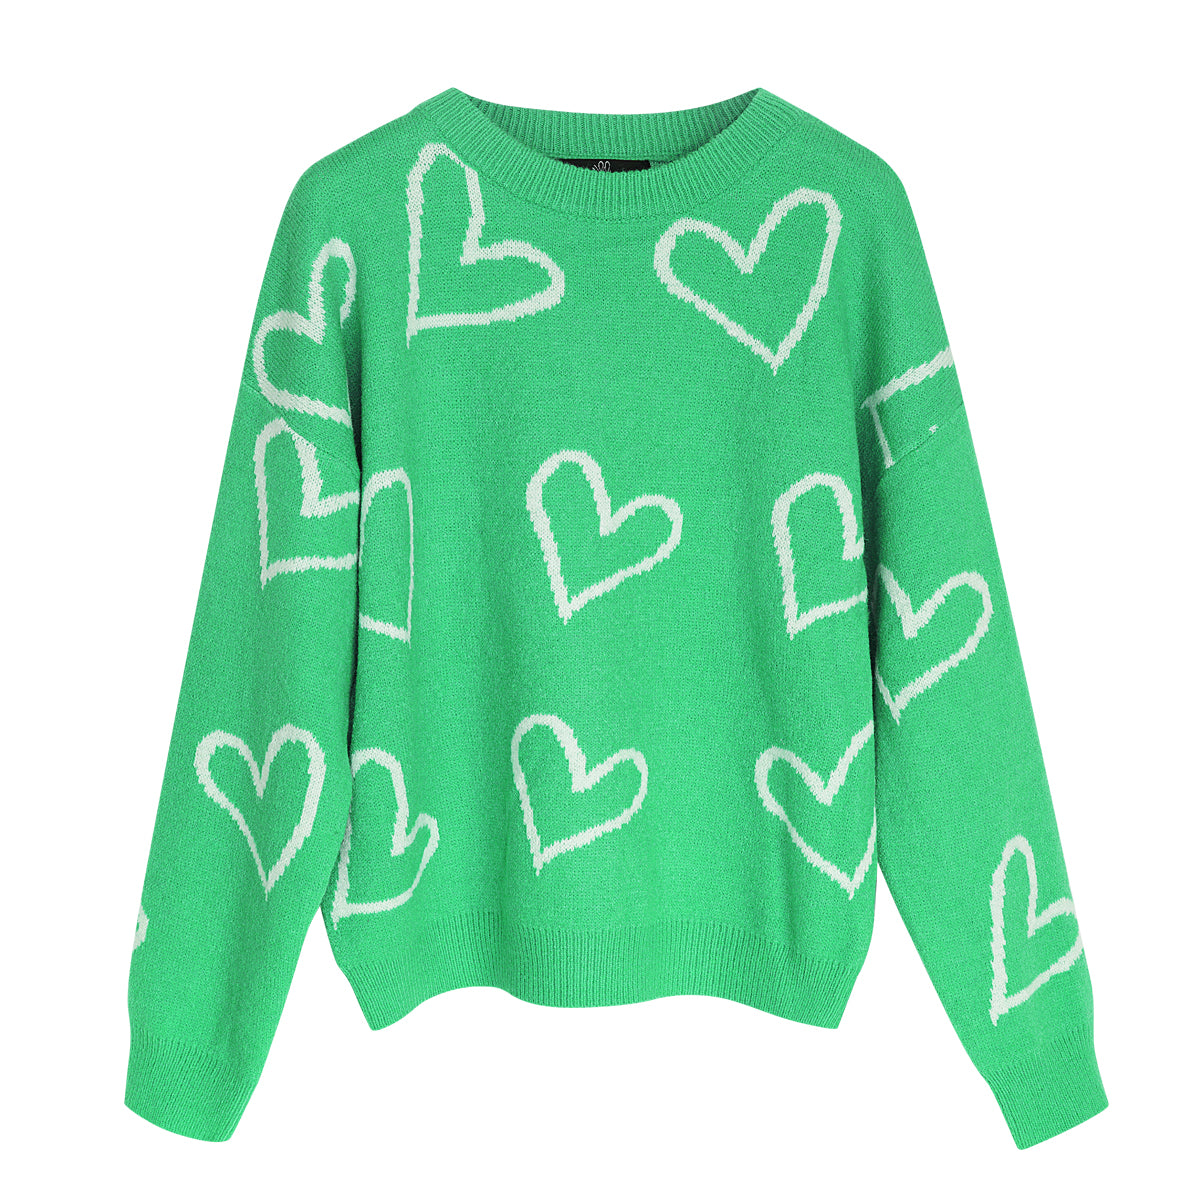 Hearts sweater